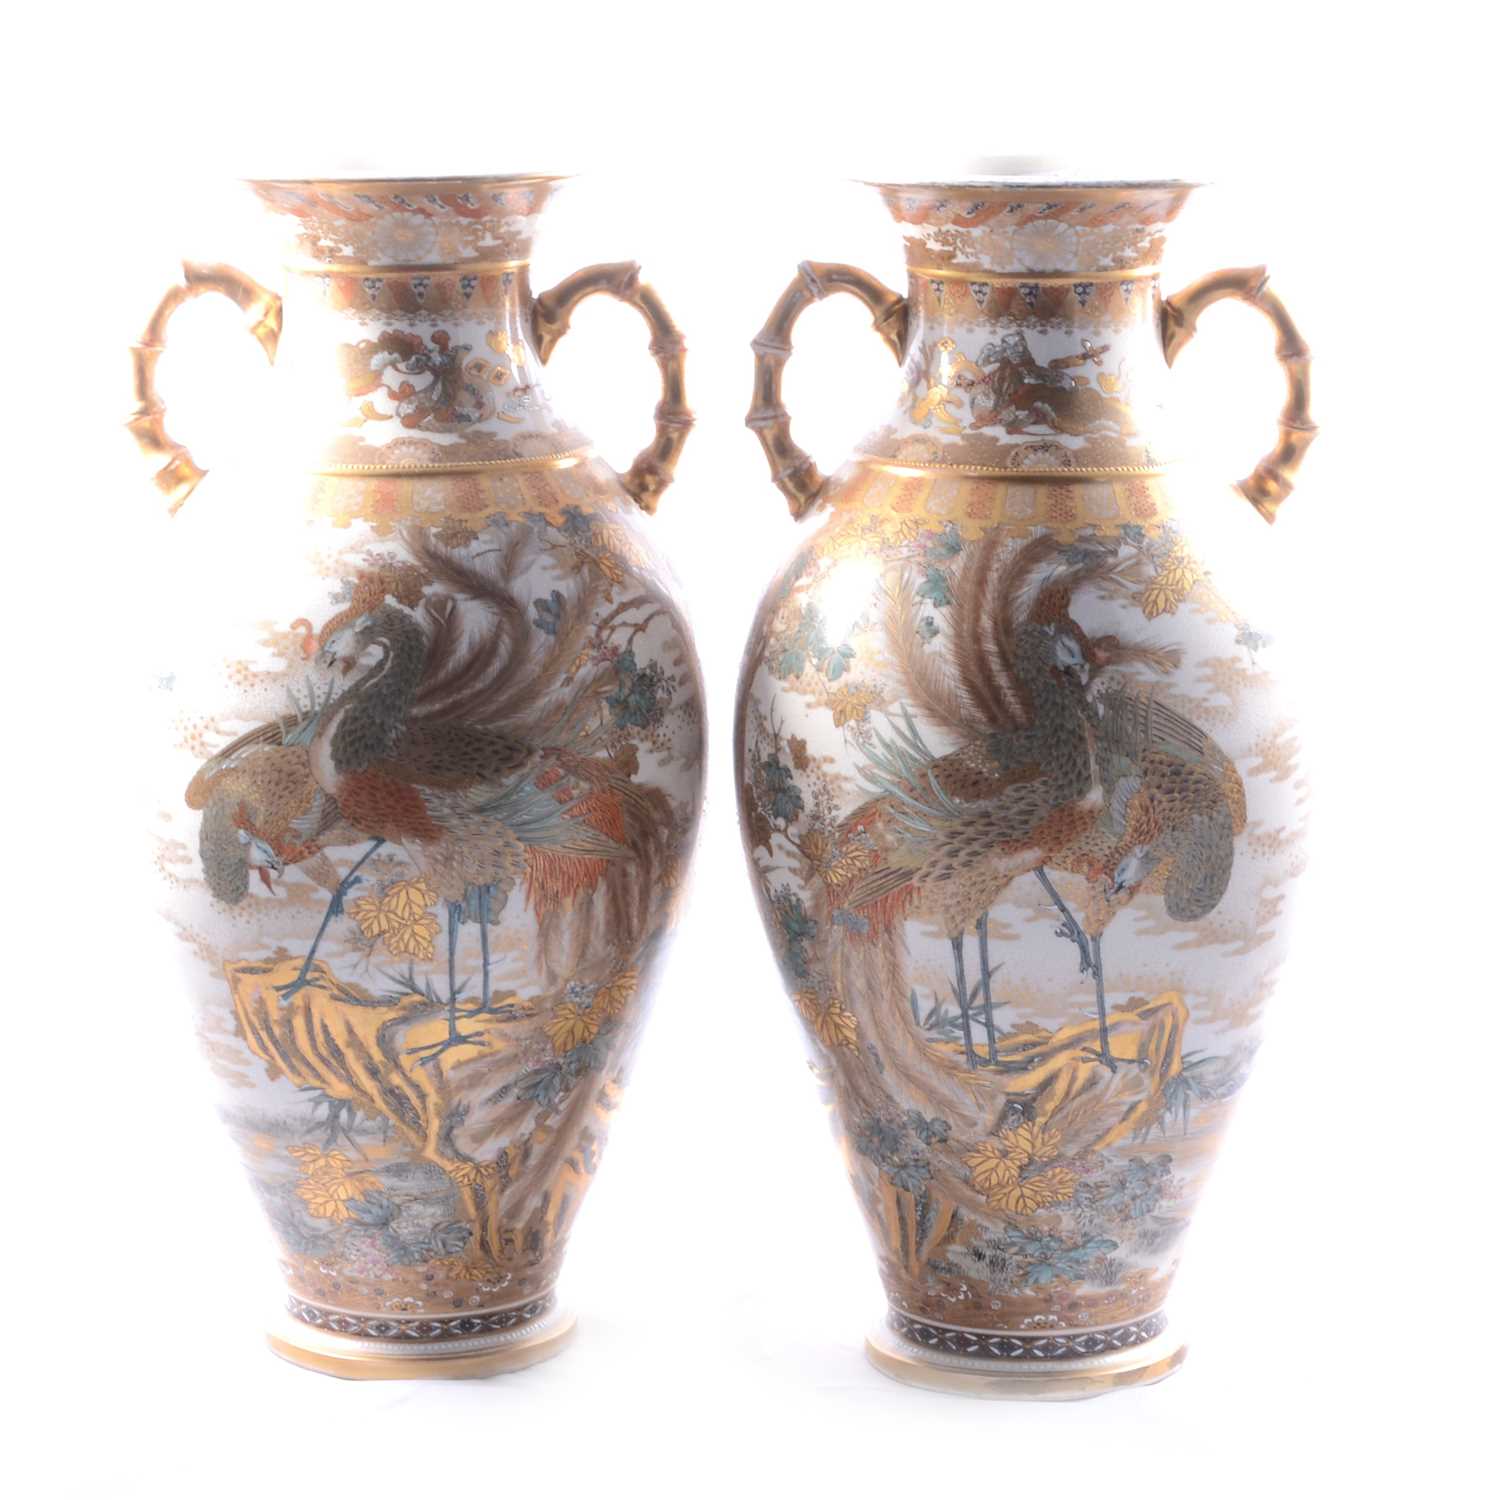 Pair of Satsuma pottery vases,